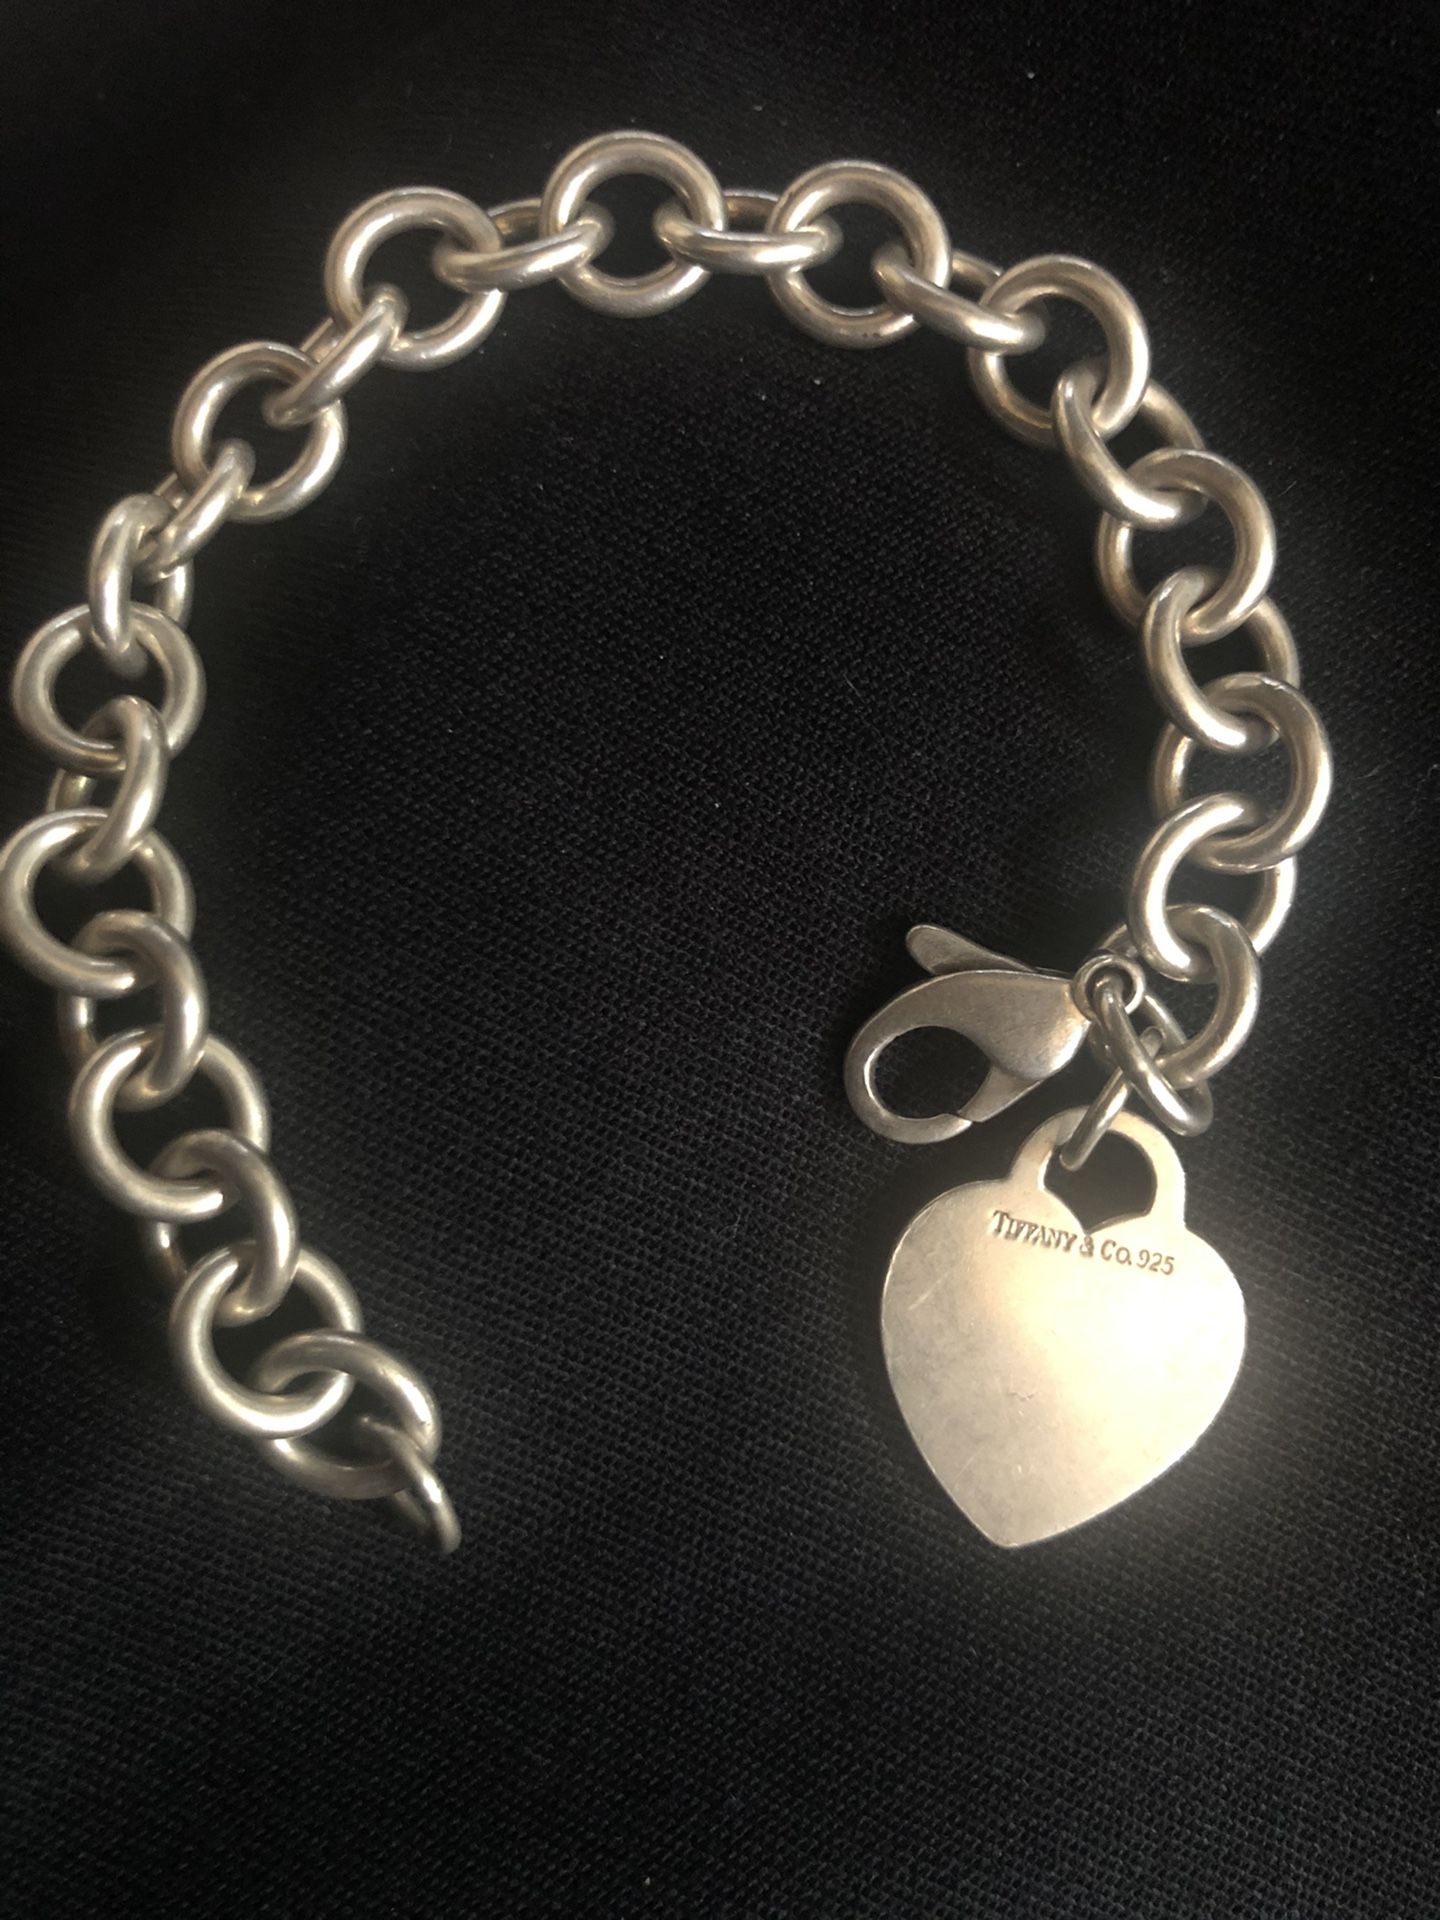 Tiffany Co. 925 charm bracelet